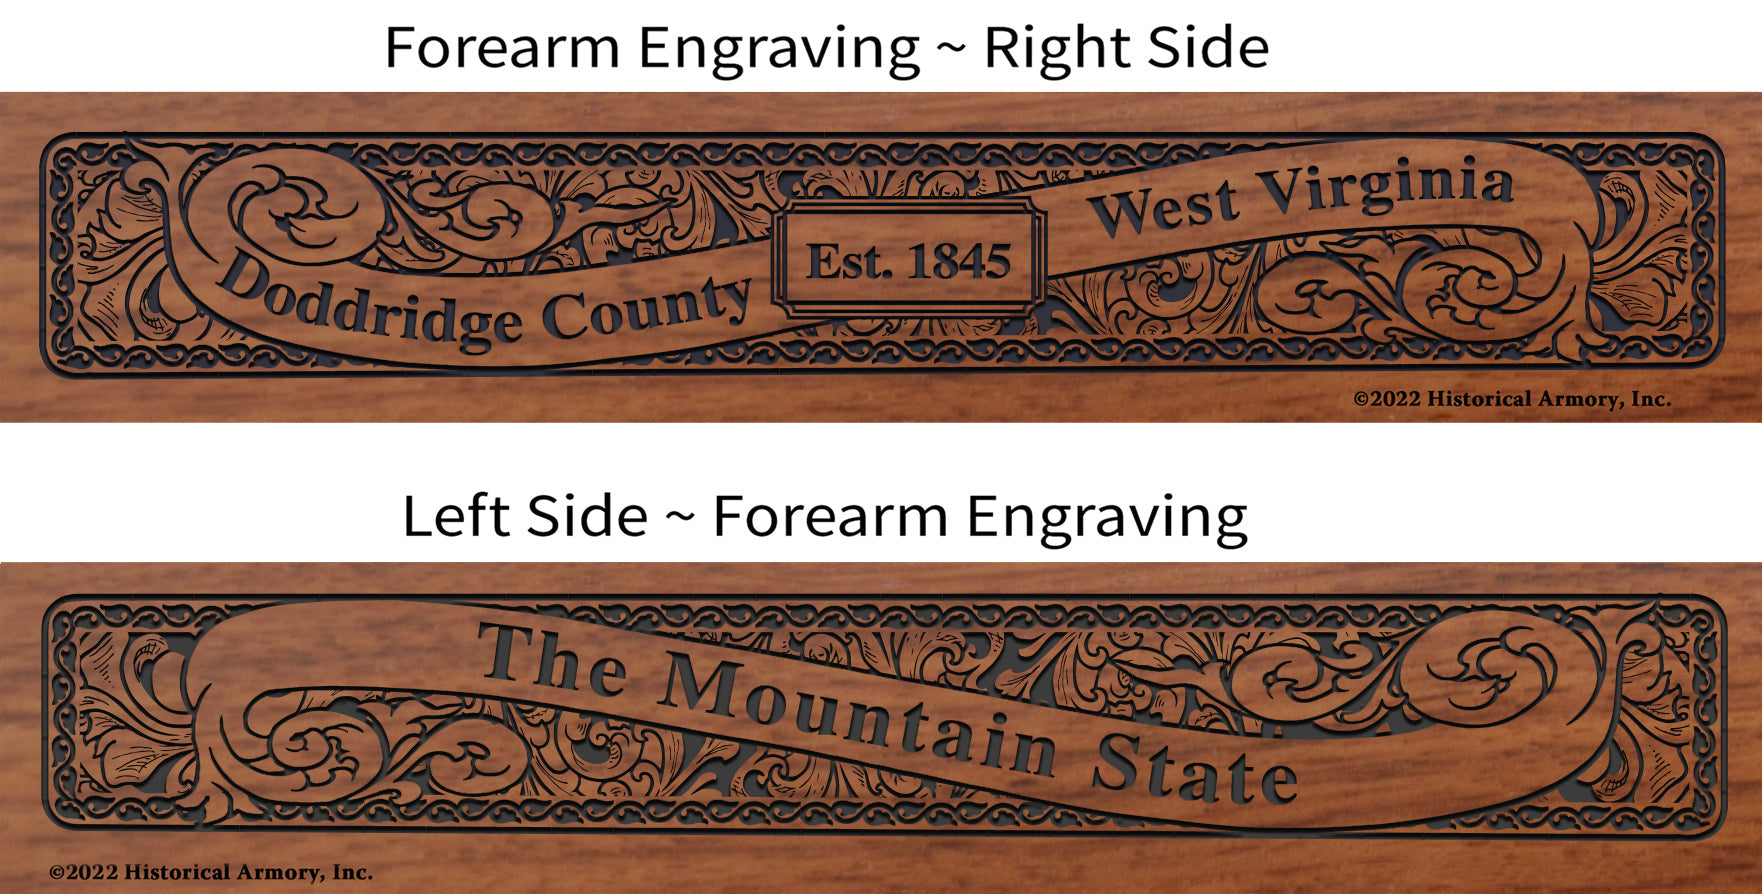 Doddridge County West Virginia Engraved Rifle Forearm